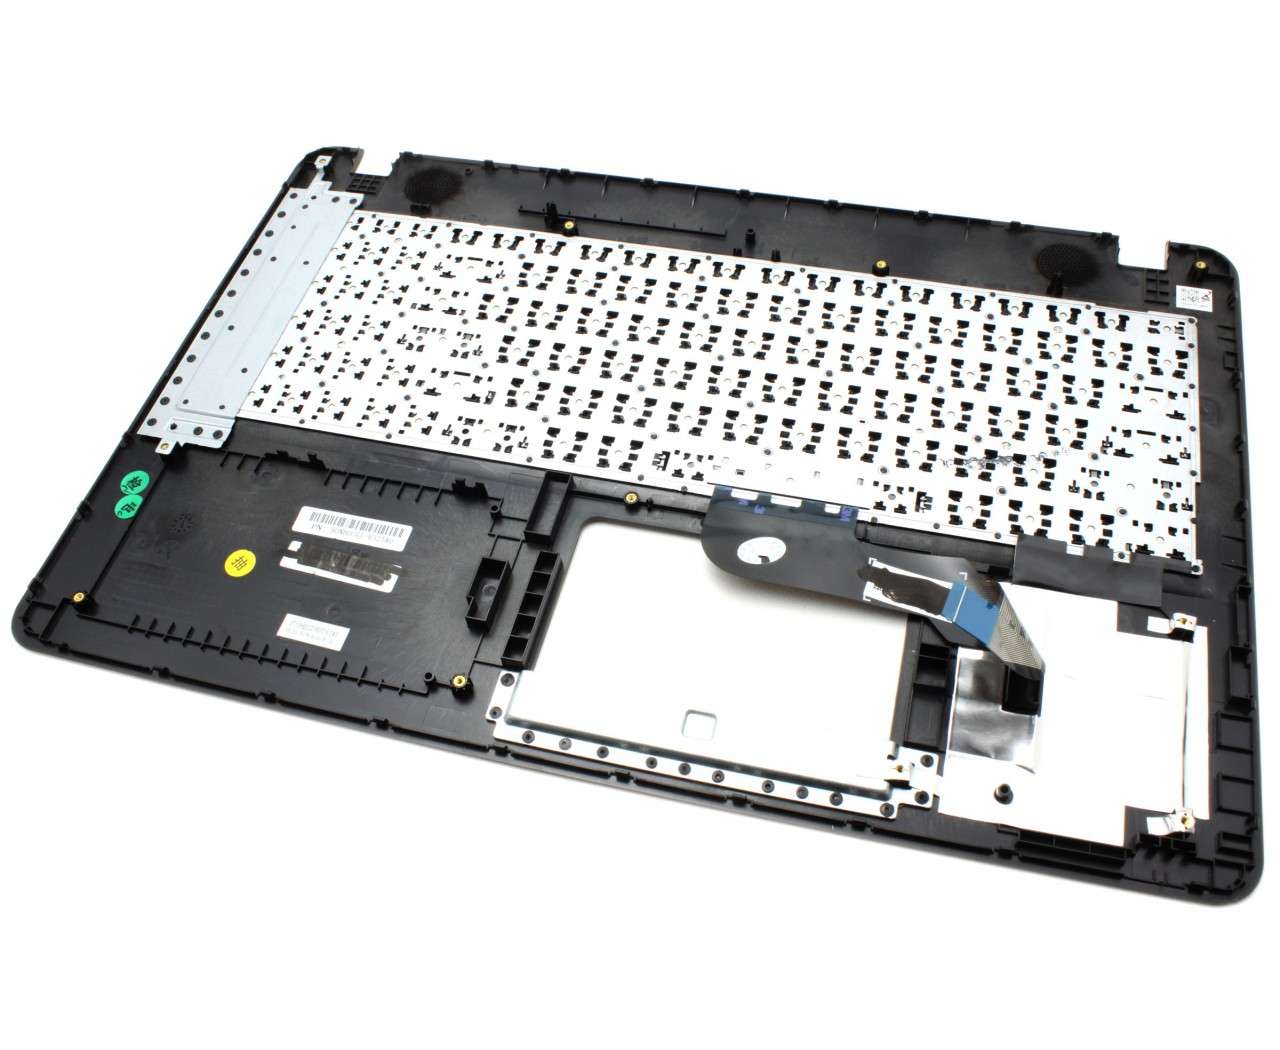 Tastatura Asus R541SC Neagra cu Palmrest Auriu